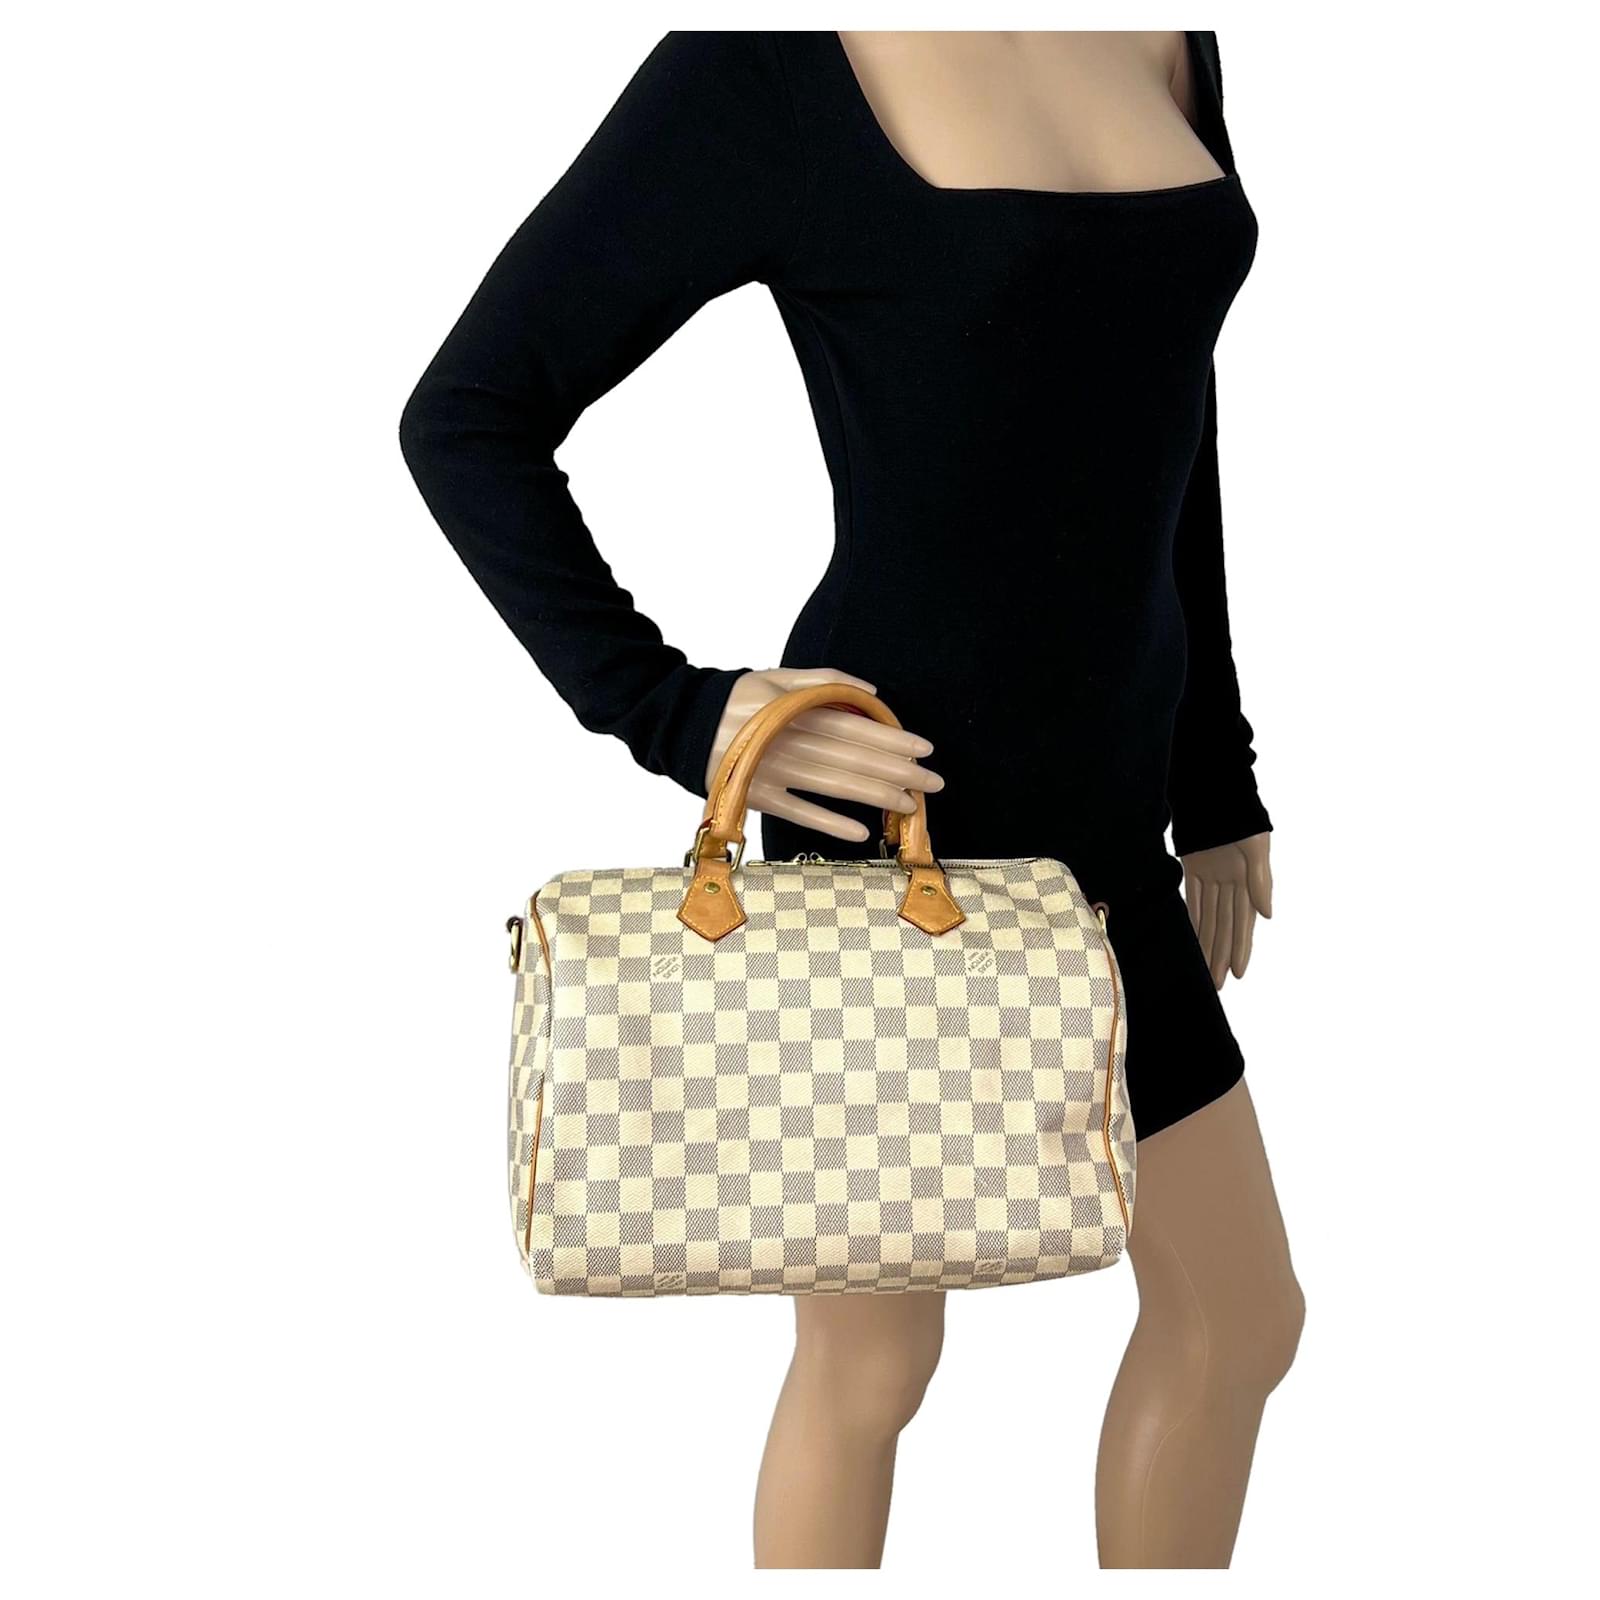 Louis Vuitton speedy Bandouliere 30 Damier Azur Shoulder Hand Bag